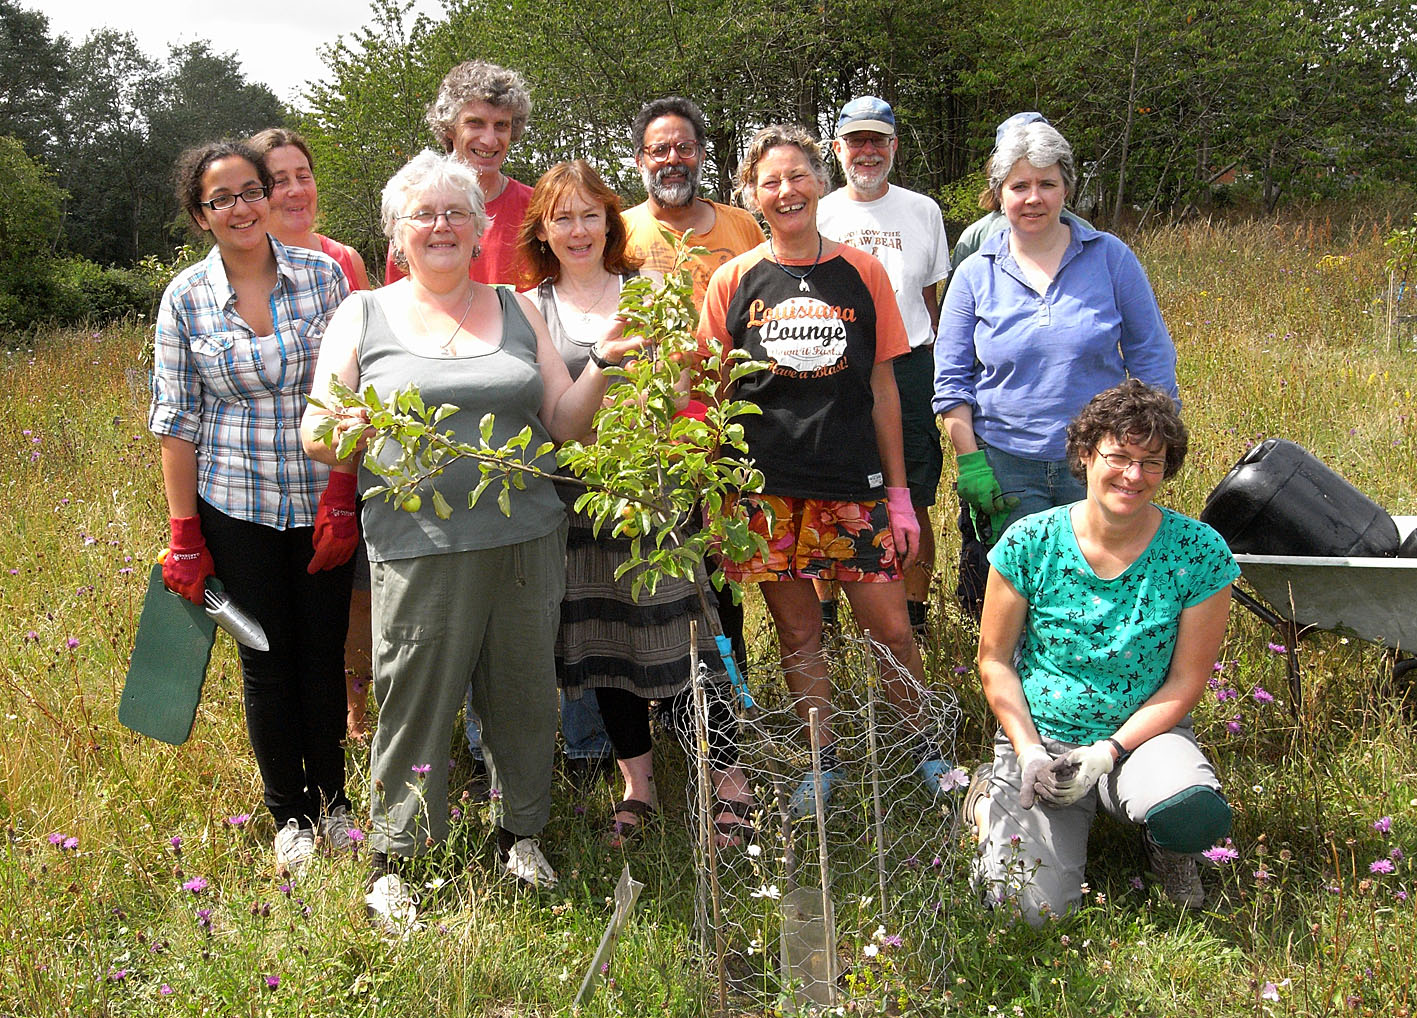 Trumpington Orchard visit - group photo